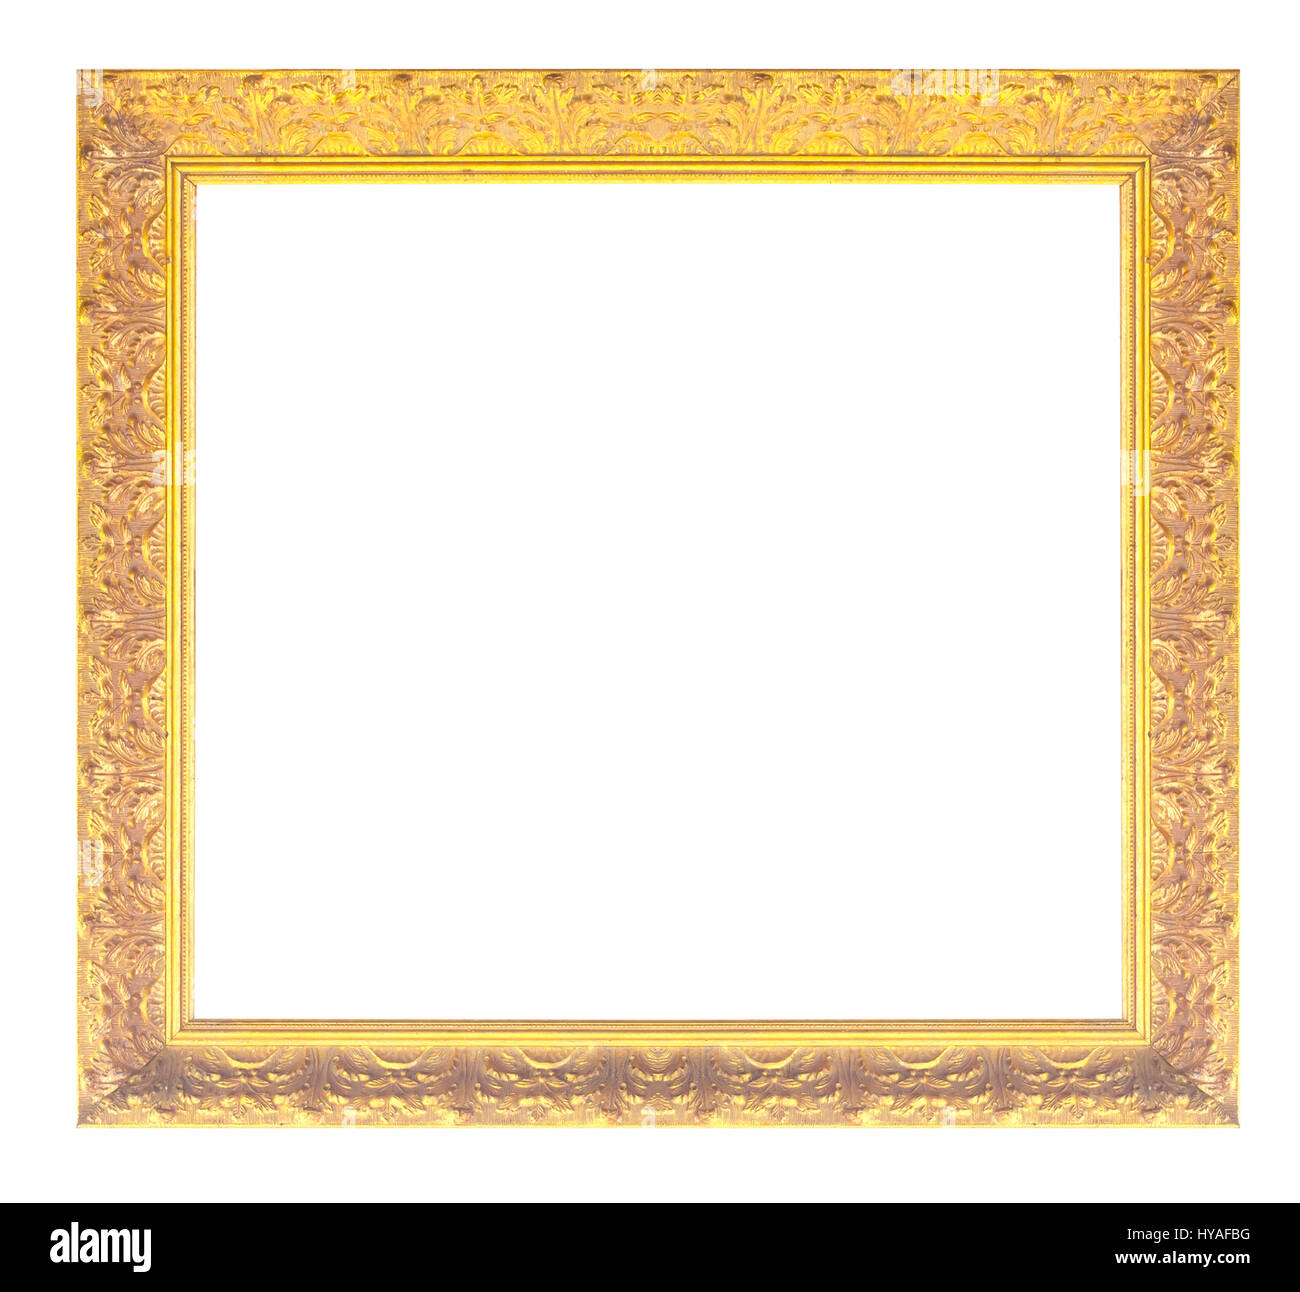 Antica cornice dorata isolati su sfondo bianco Foto stock - Alamy